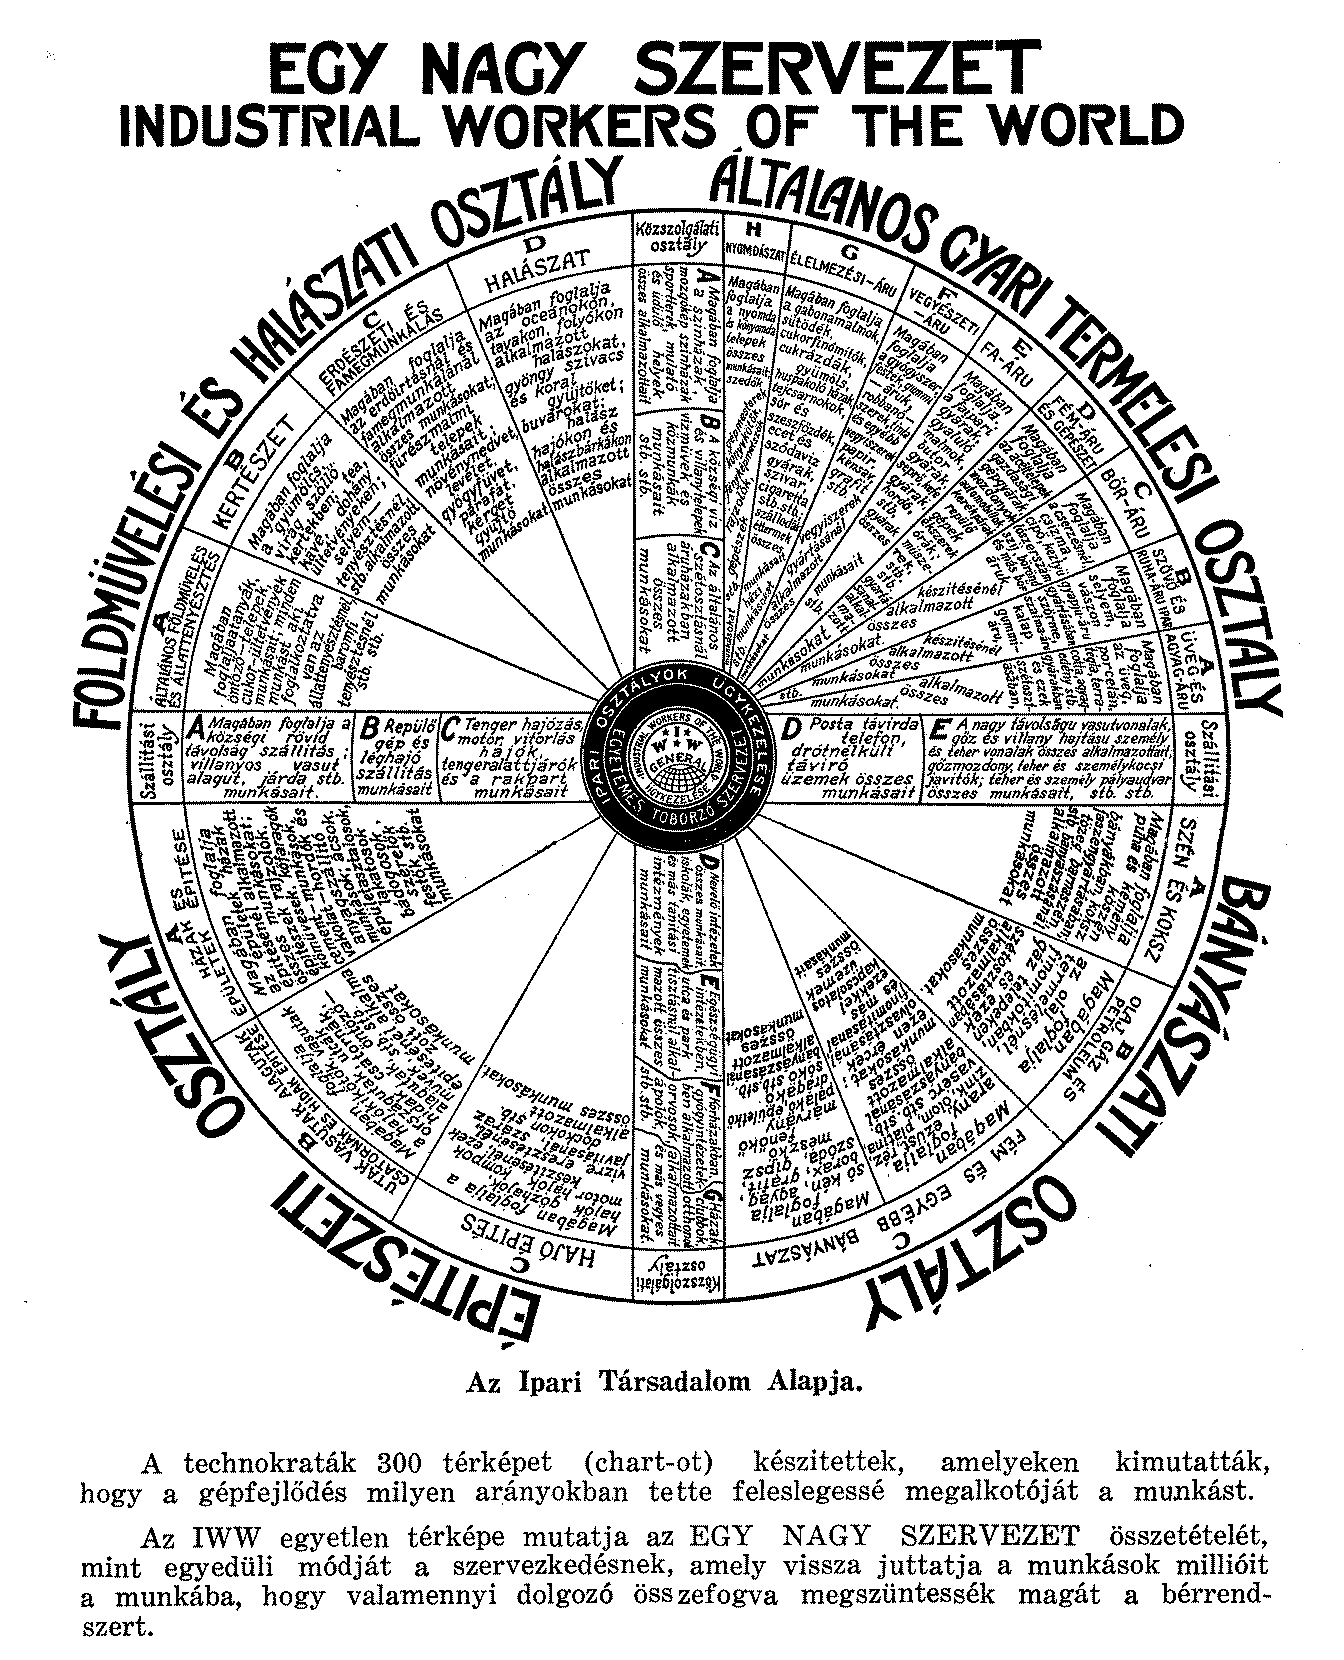 The I.W.W. Wheel in Hungarian, 1933